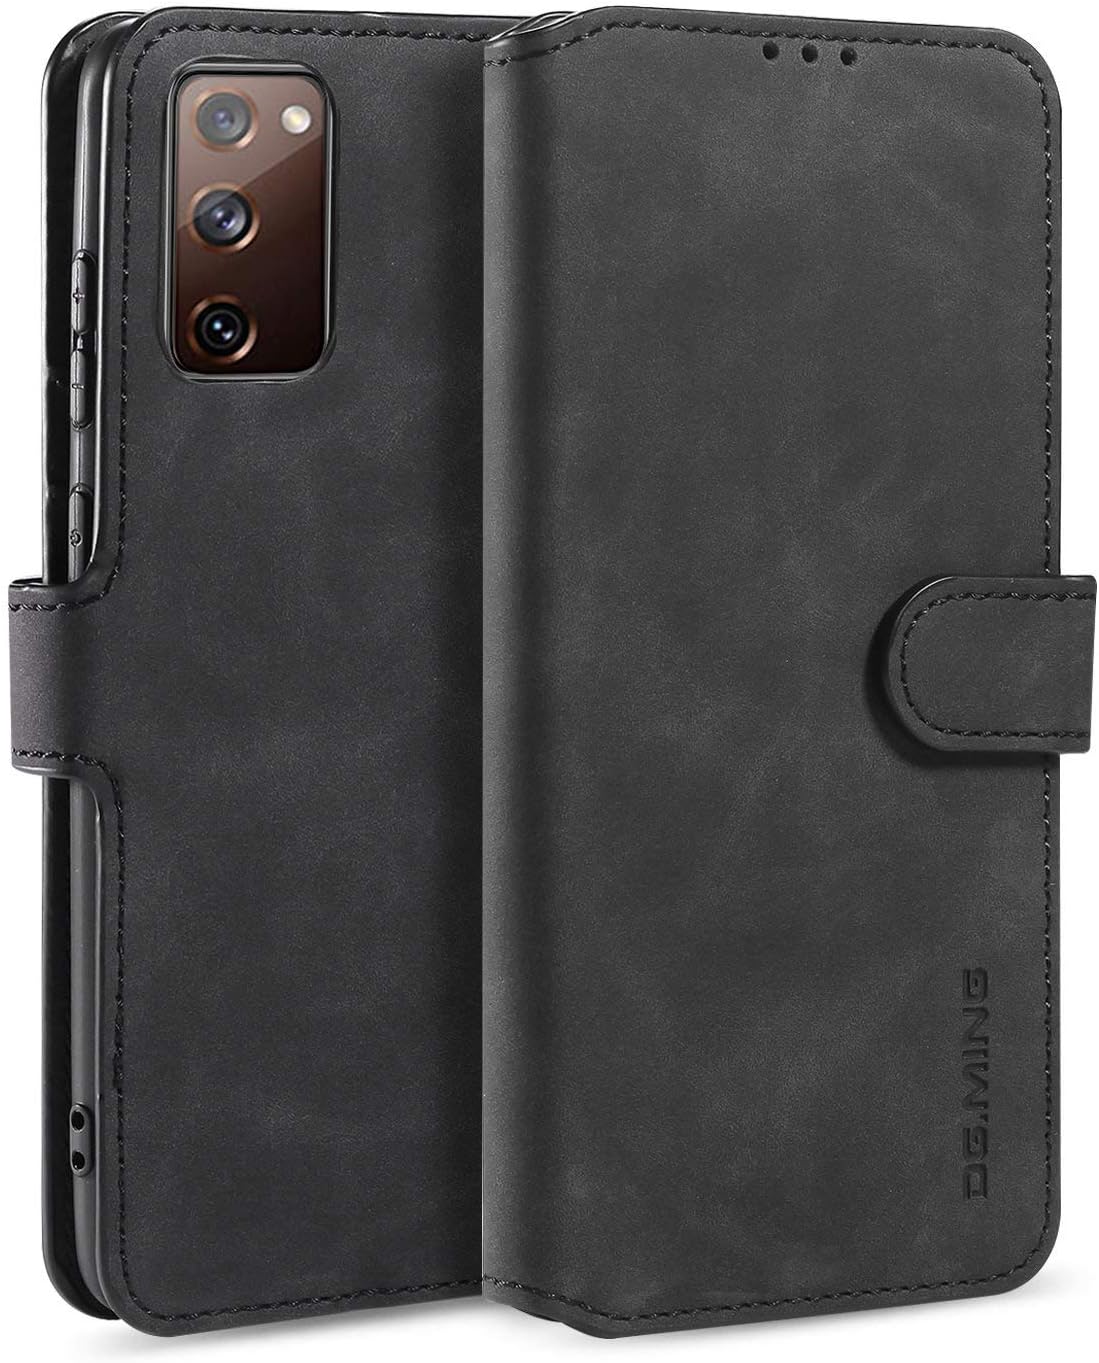 Samsung Galaxy 20 PU Leather Shell Case Cover Funda